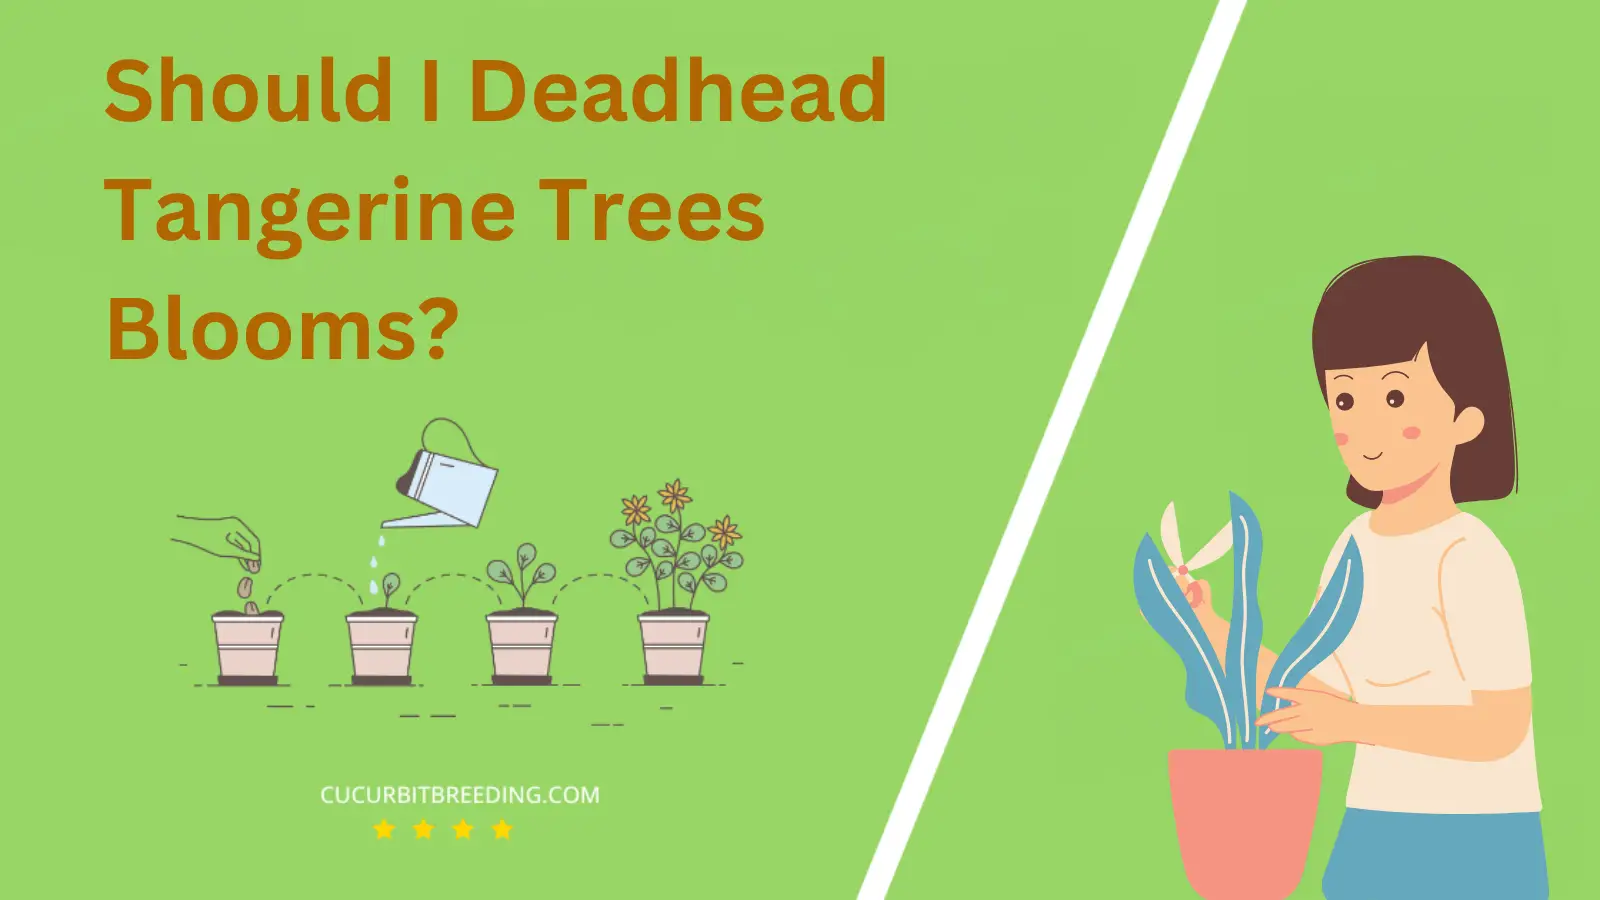 Should I Deadhead Tangerine Trees Blooms?